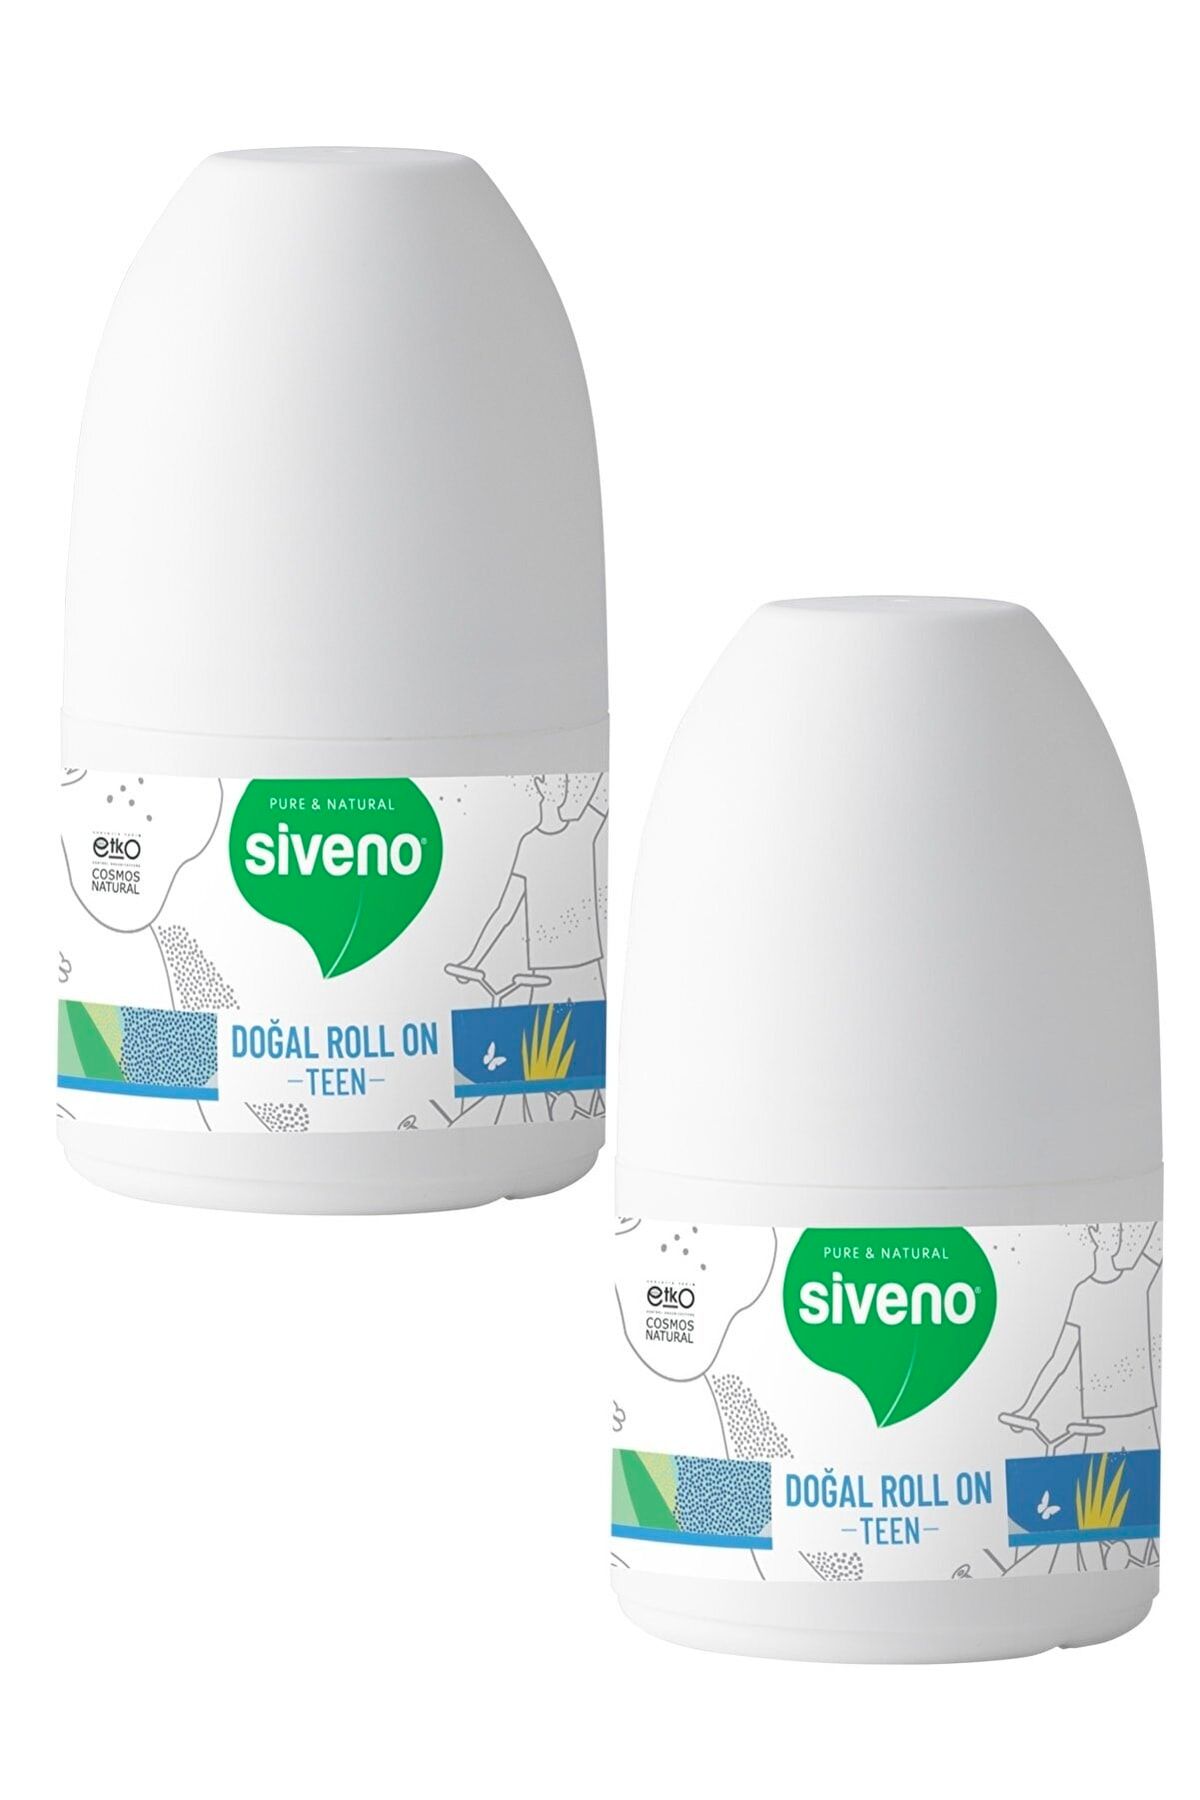 Siveno %100 Doğal Roll-On Teen Blue Erkek Deodorant Ter Kokusu Önleyici Bitkisel Lekesiz 50 ml X 2 Adet